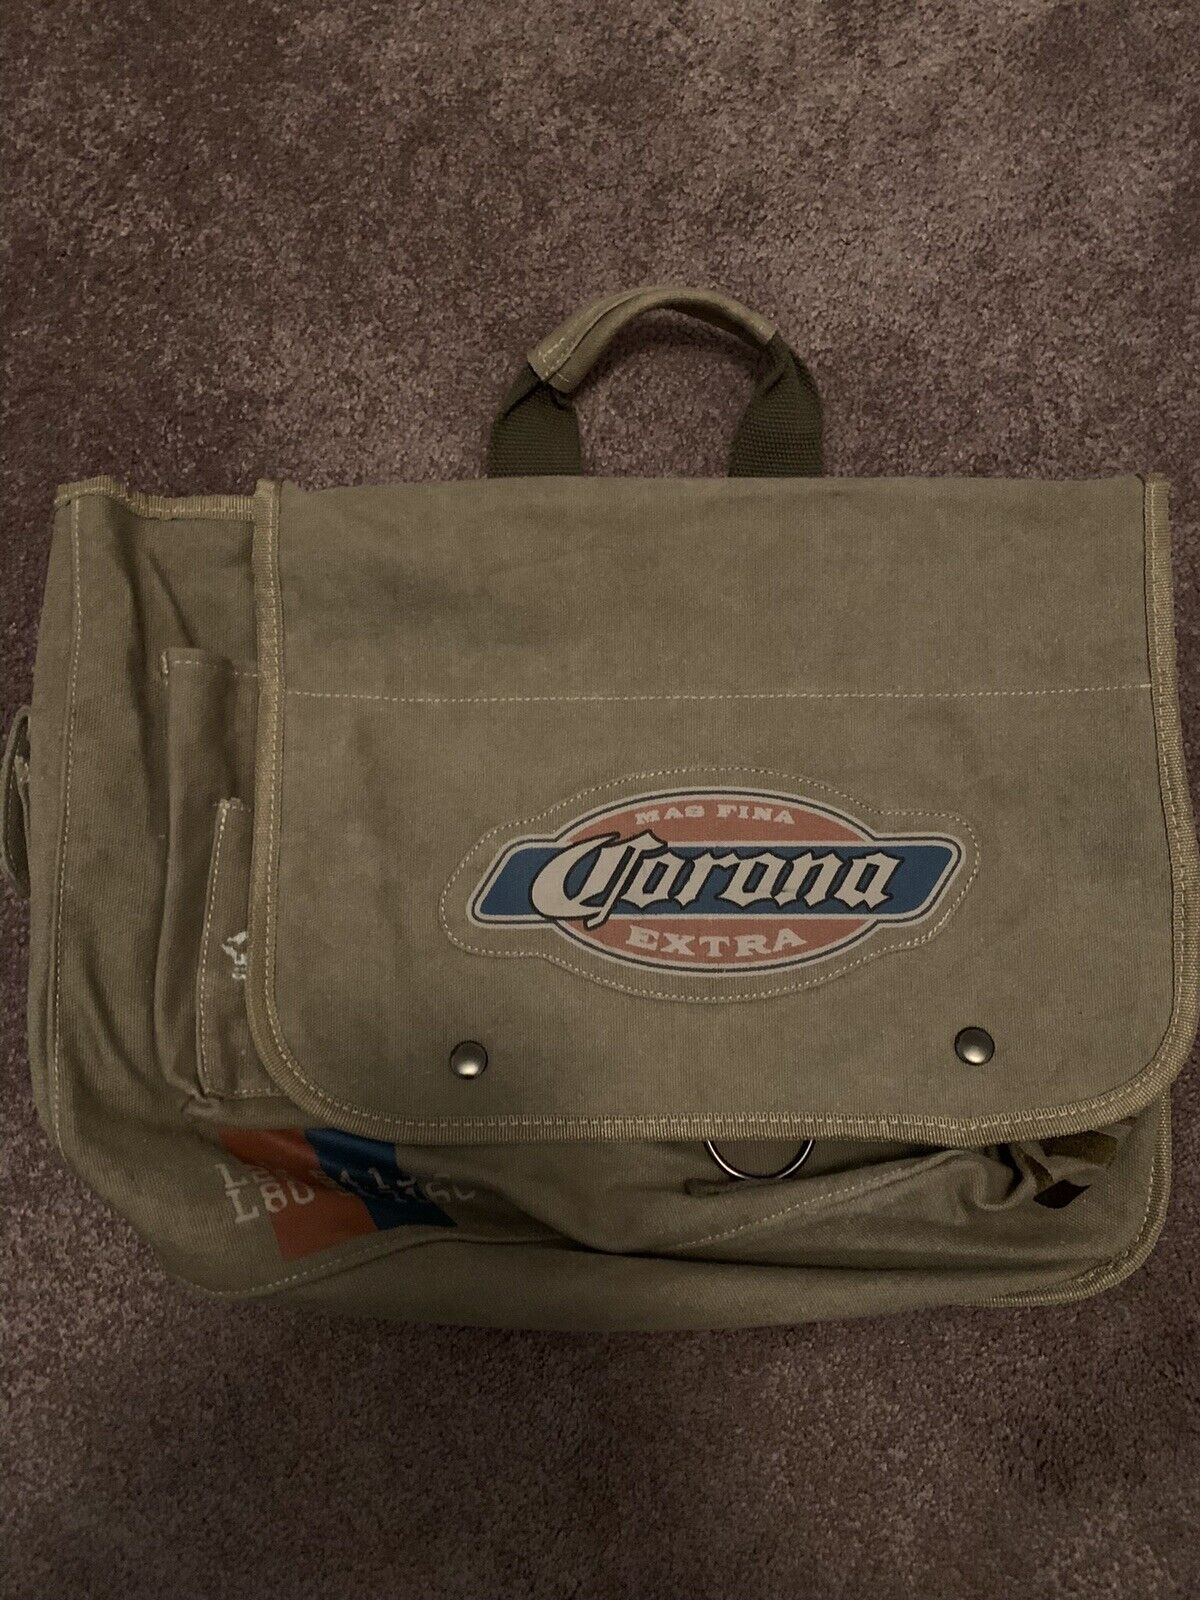 Corona Beer Canvas Messenger Bag with shoulder Strap Rare HTF